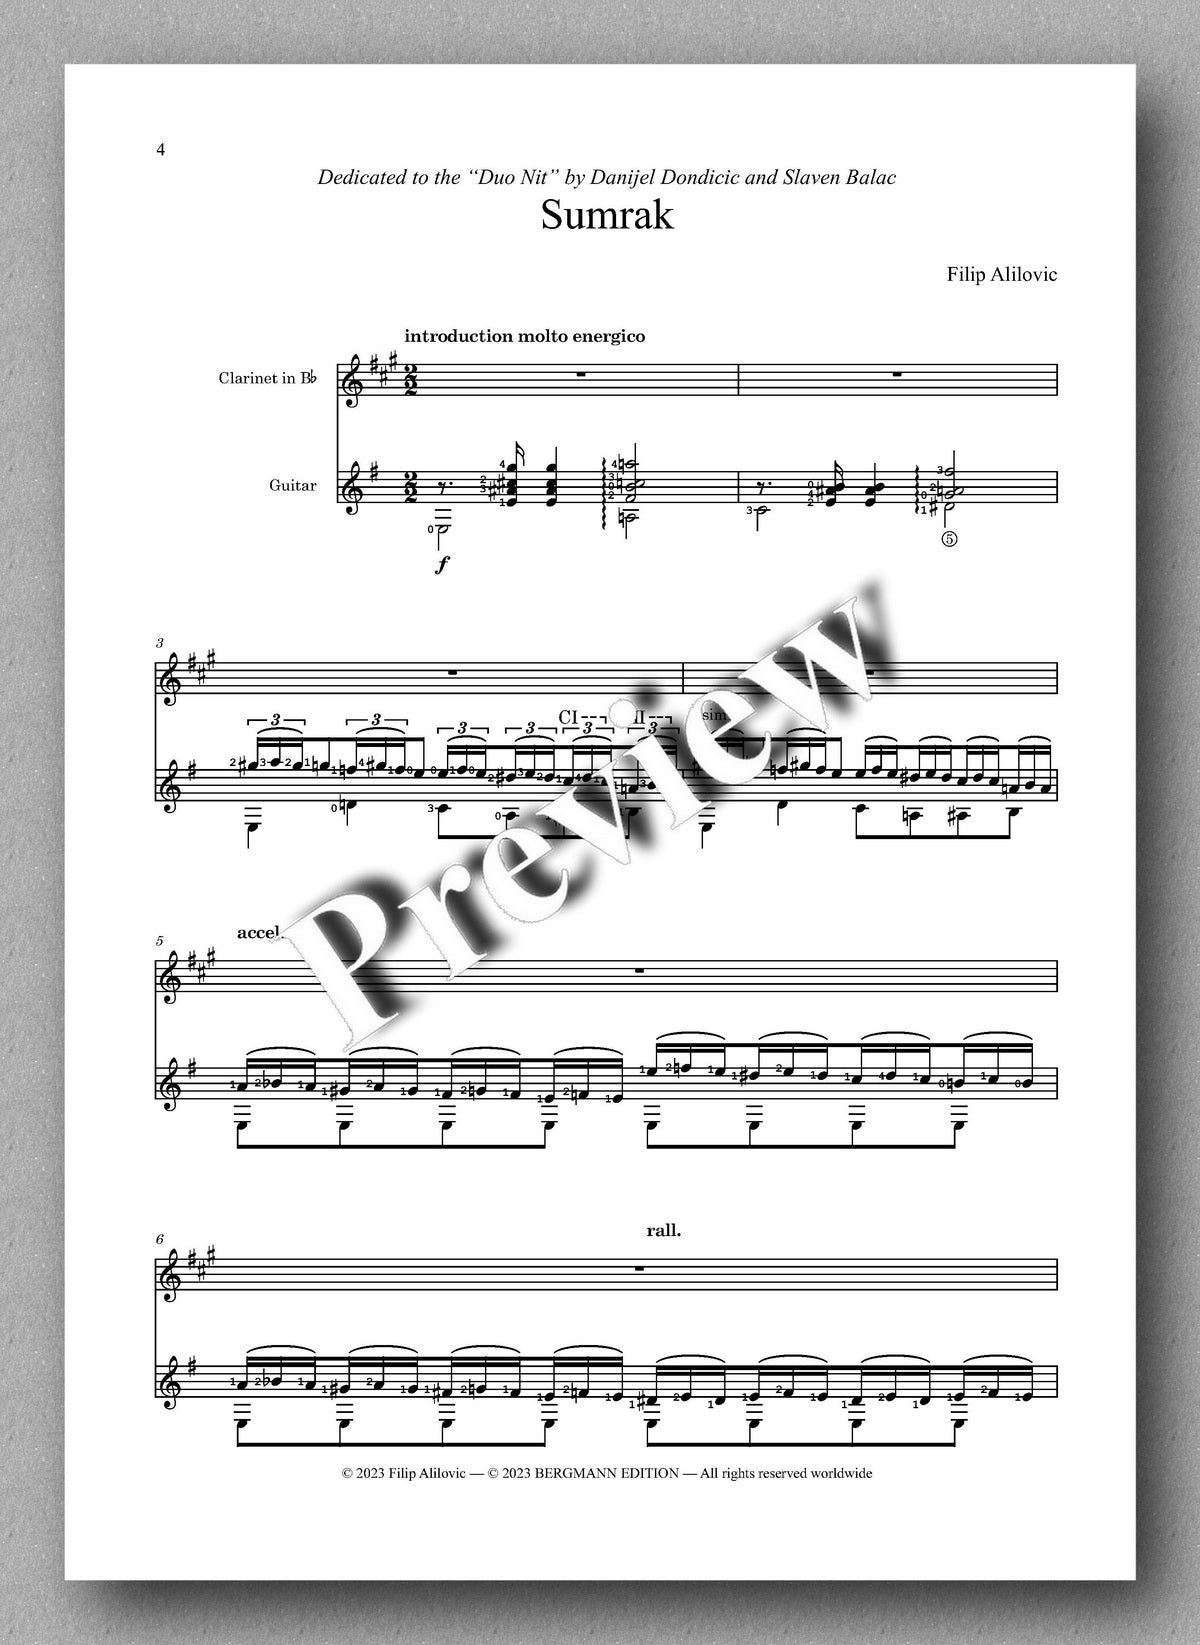 Filip Alilovic, Pjesme sumraka - preview of the music score 1